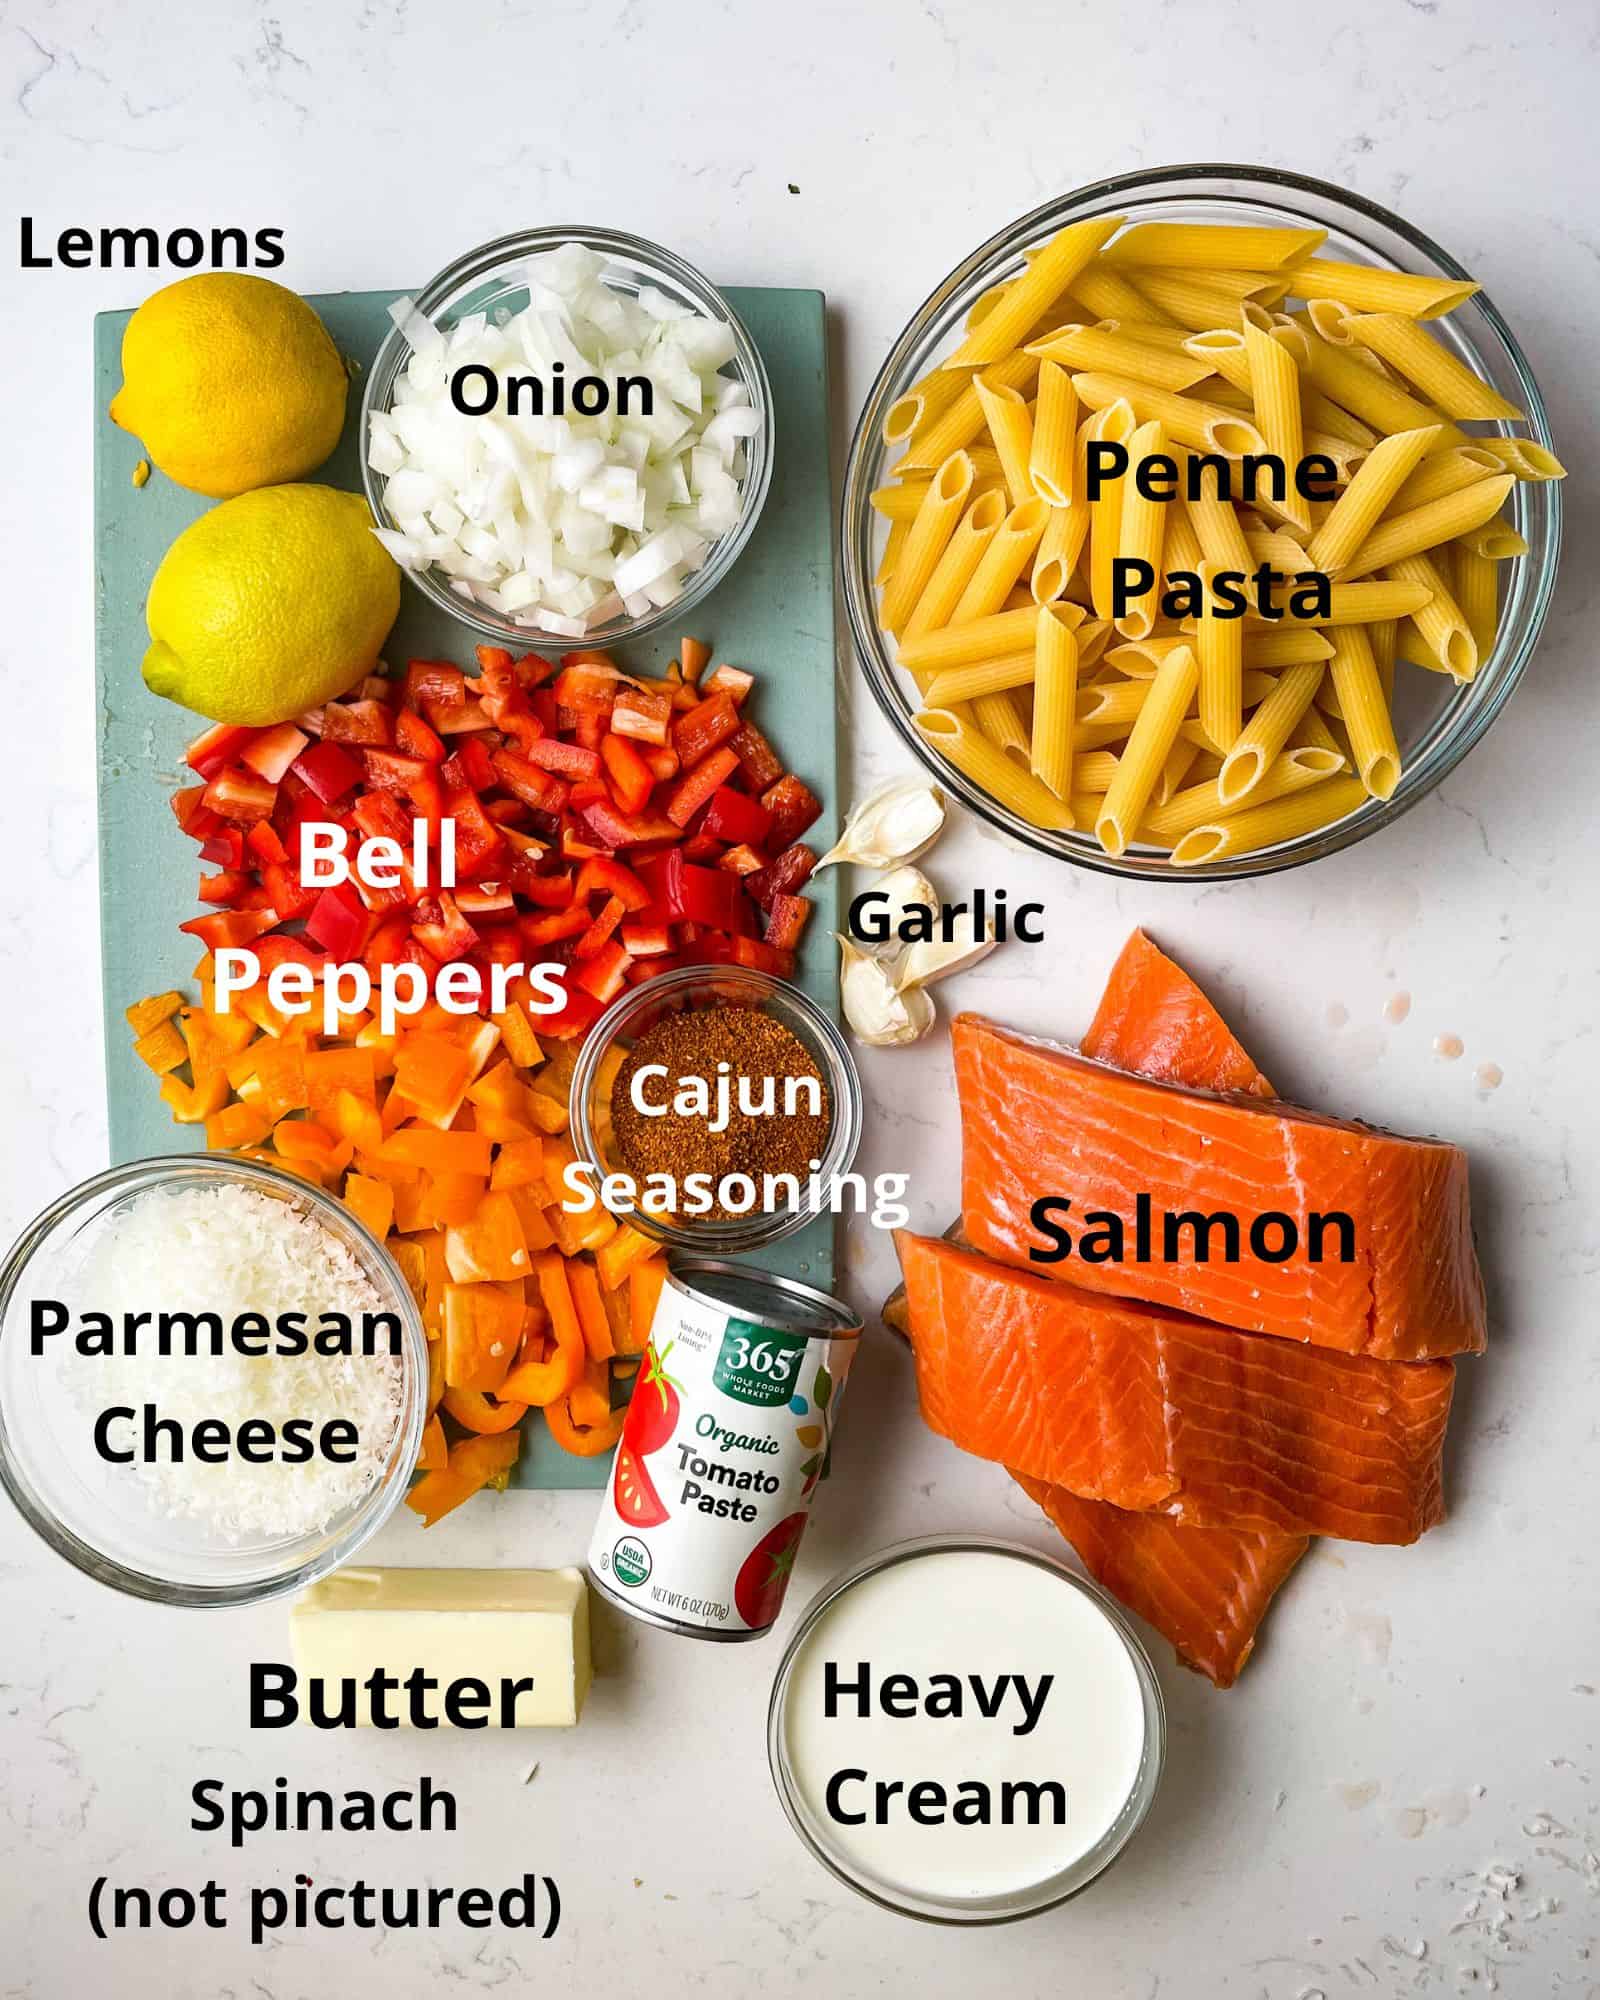 ingredients to make cajun salmon pasta - salmon, cajun seasoning, tomato paste, heavy cream, butter, onion, bell peppers, lemons, parmesan cheese, garlic, and pasta.